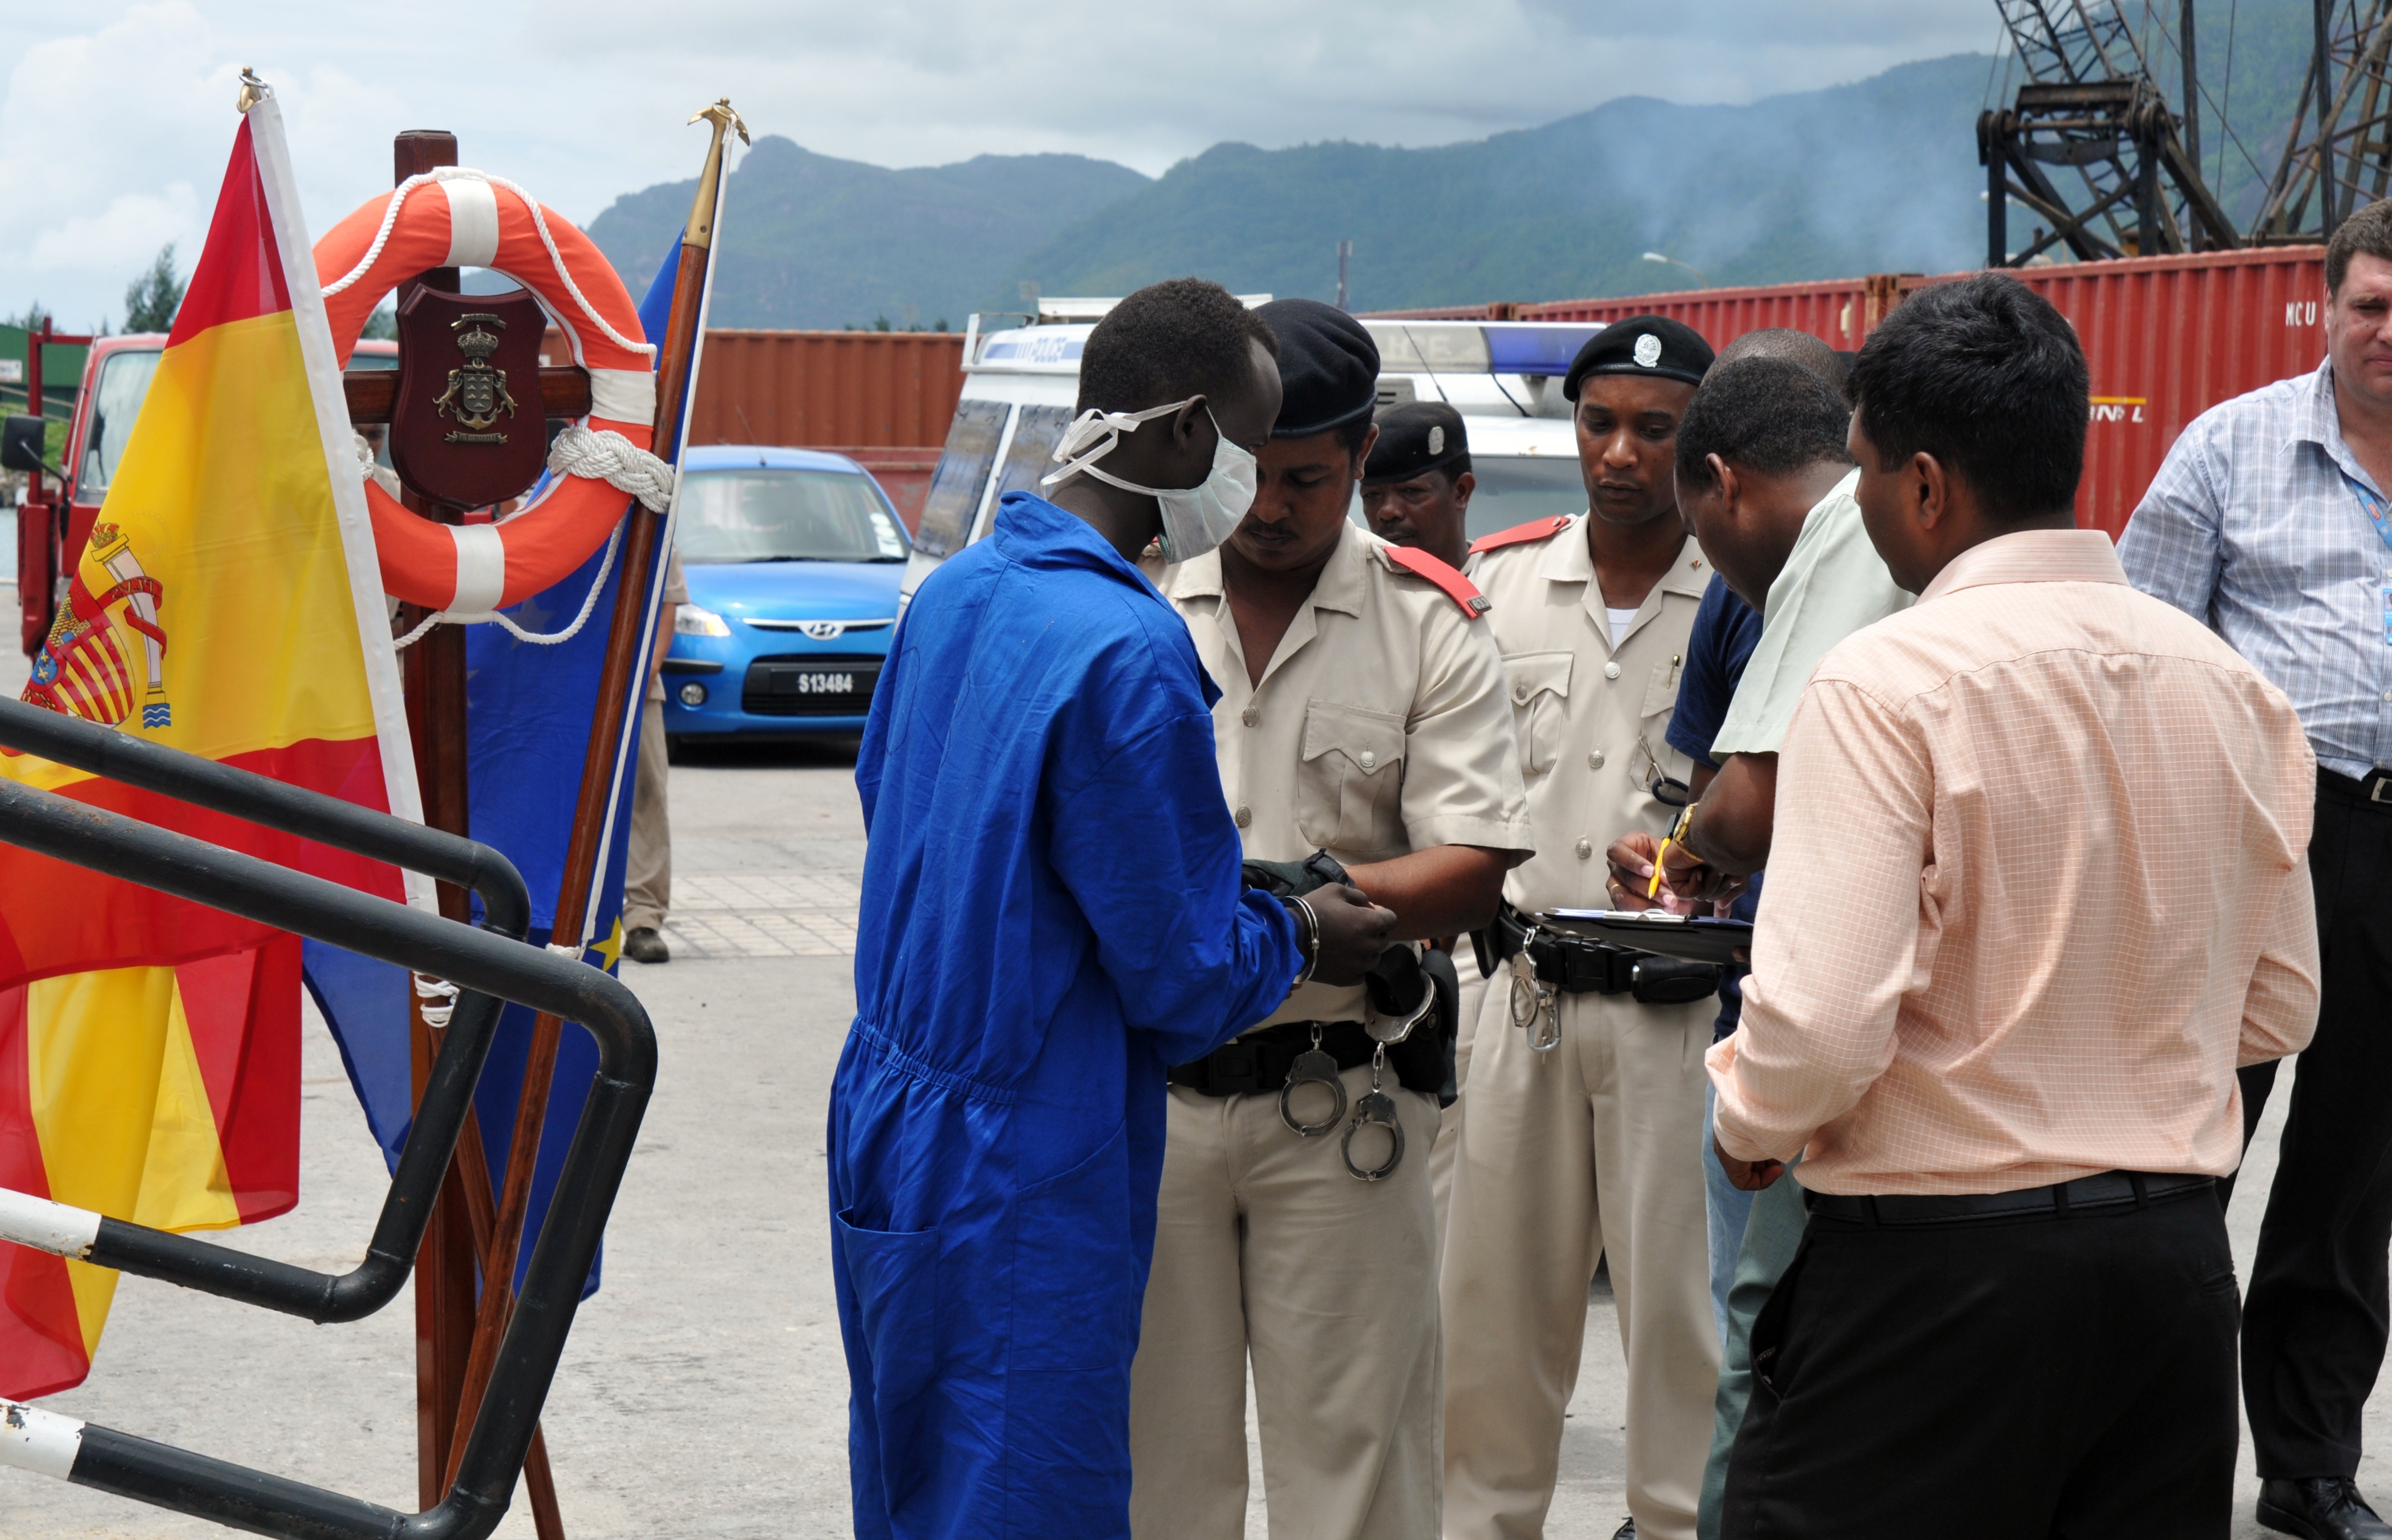 Handover of suspects in Seychelles Photo: UNODC